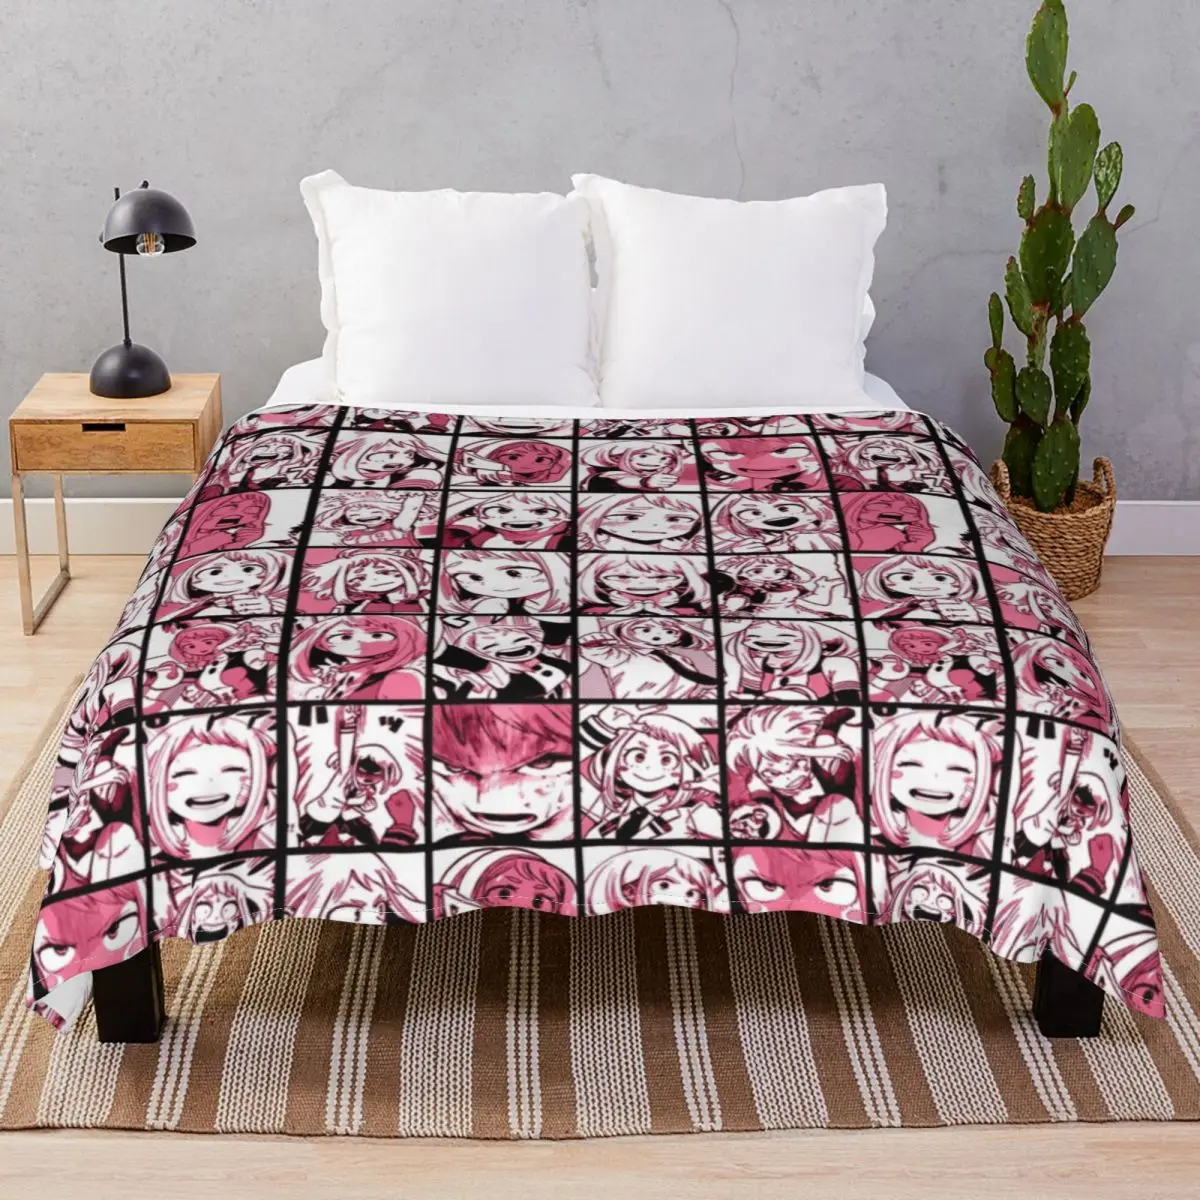 Uraraka Ochako Collage Blankets Fleece Spring Autumn Super Soft Throw Blanket for Bedding Home Couch Travel Cinema